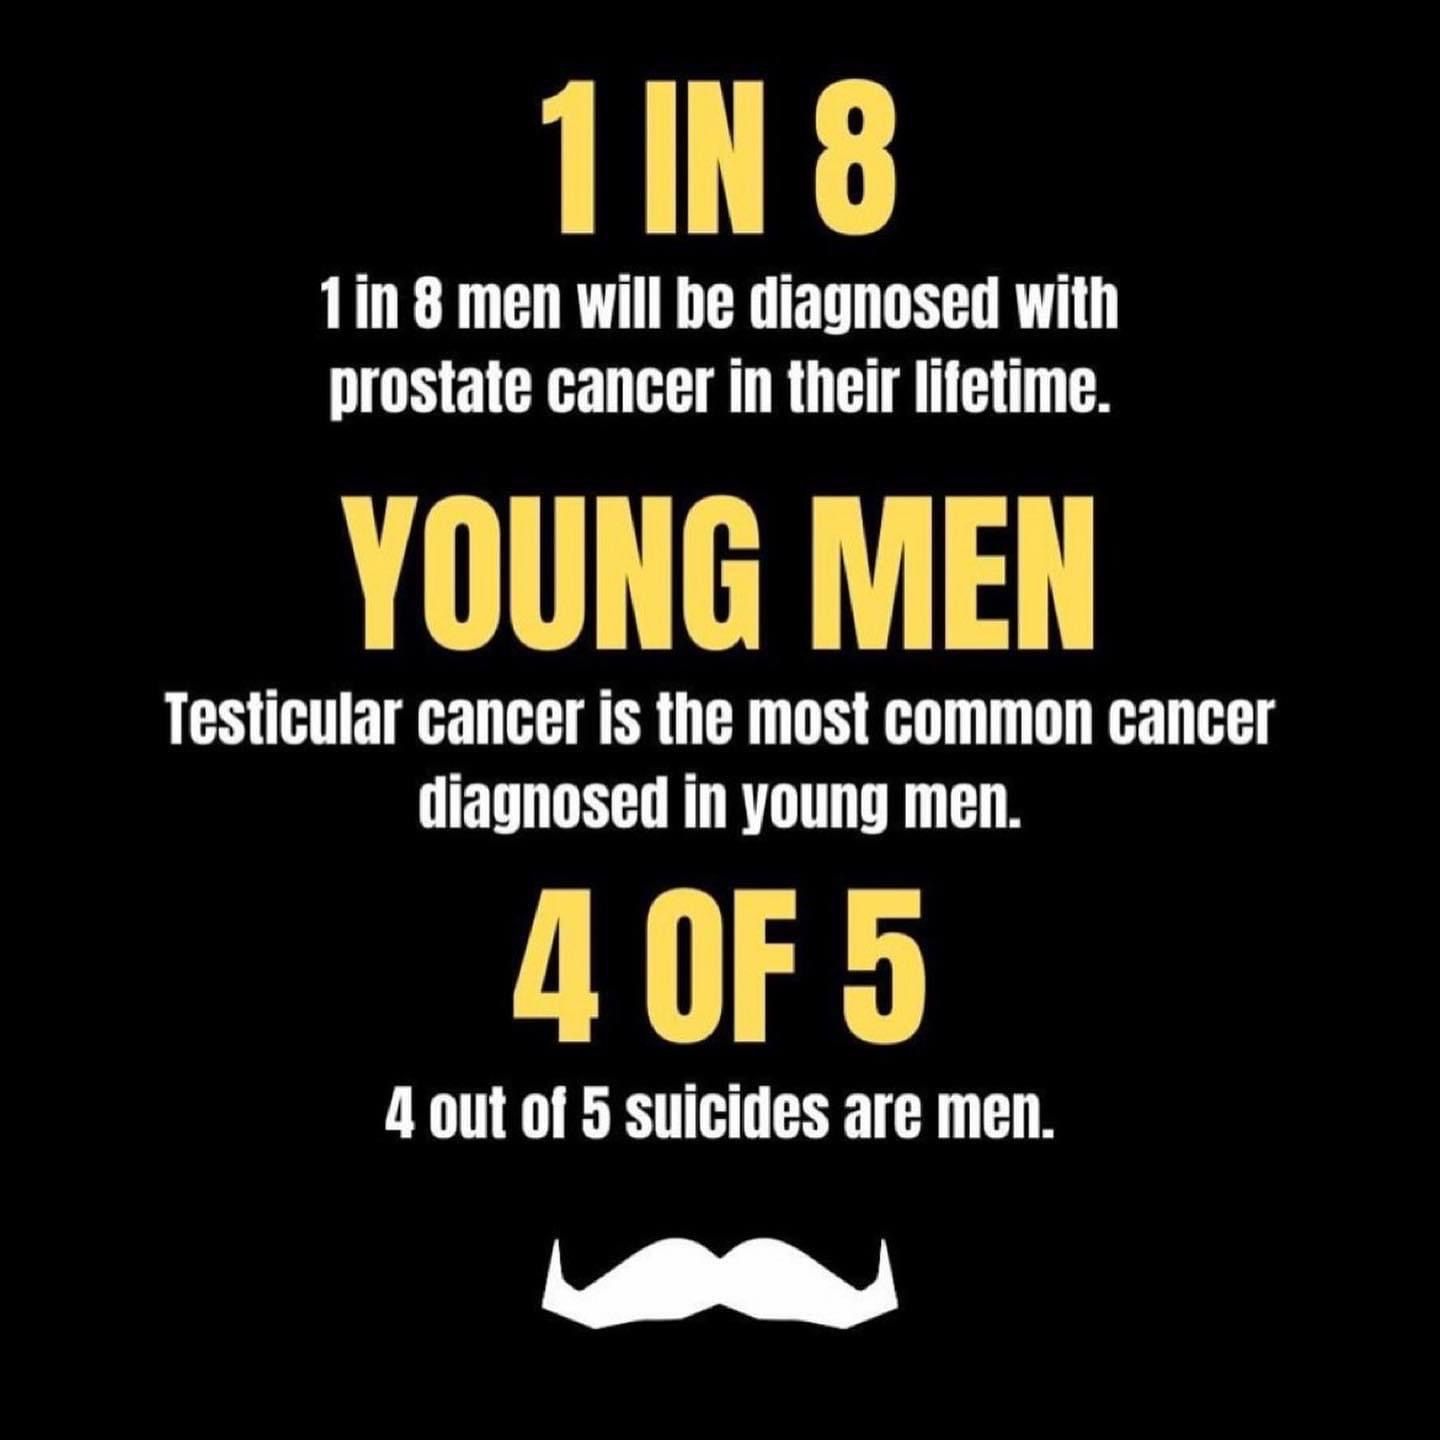 November is Men's Mental Health Awareness Month